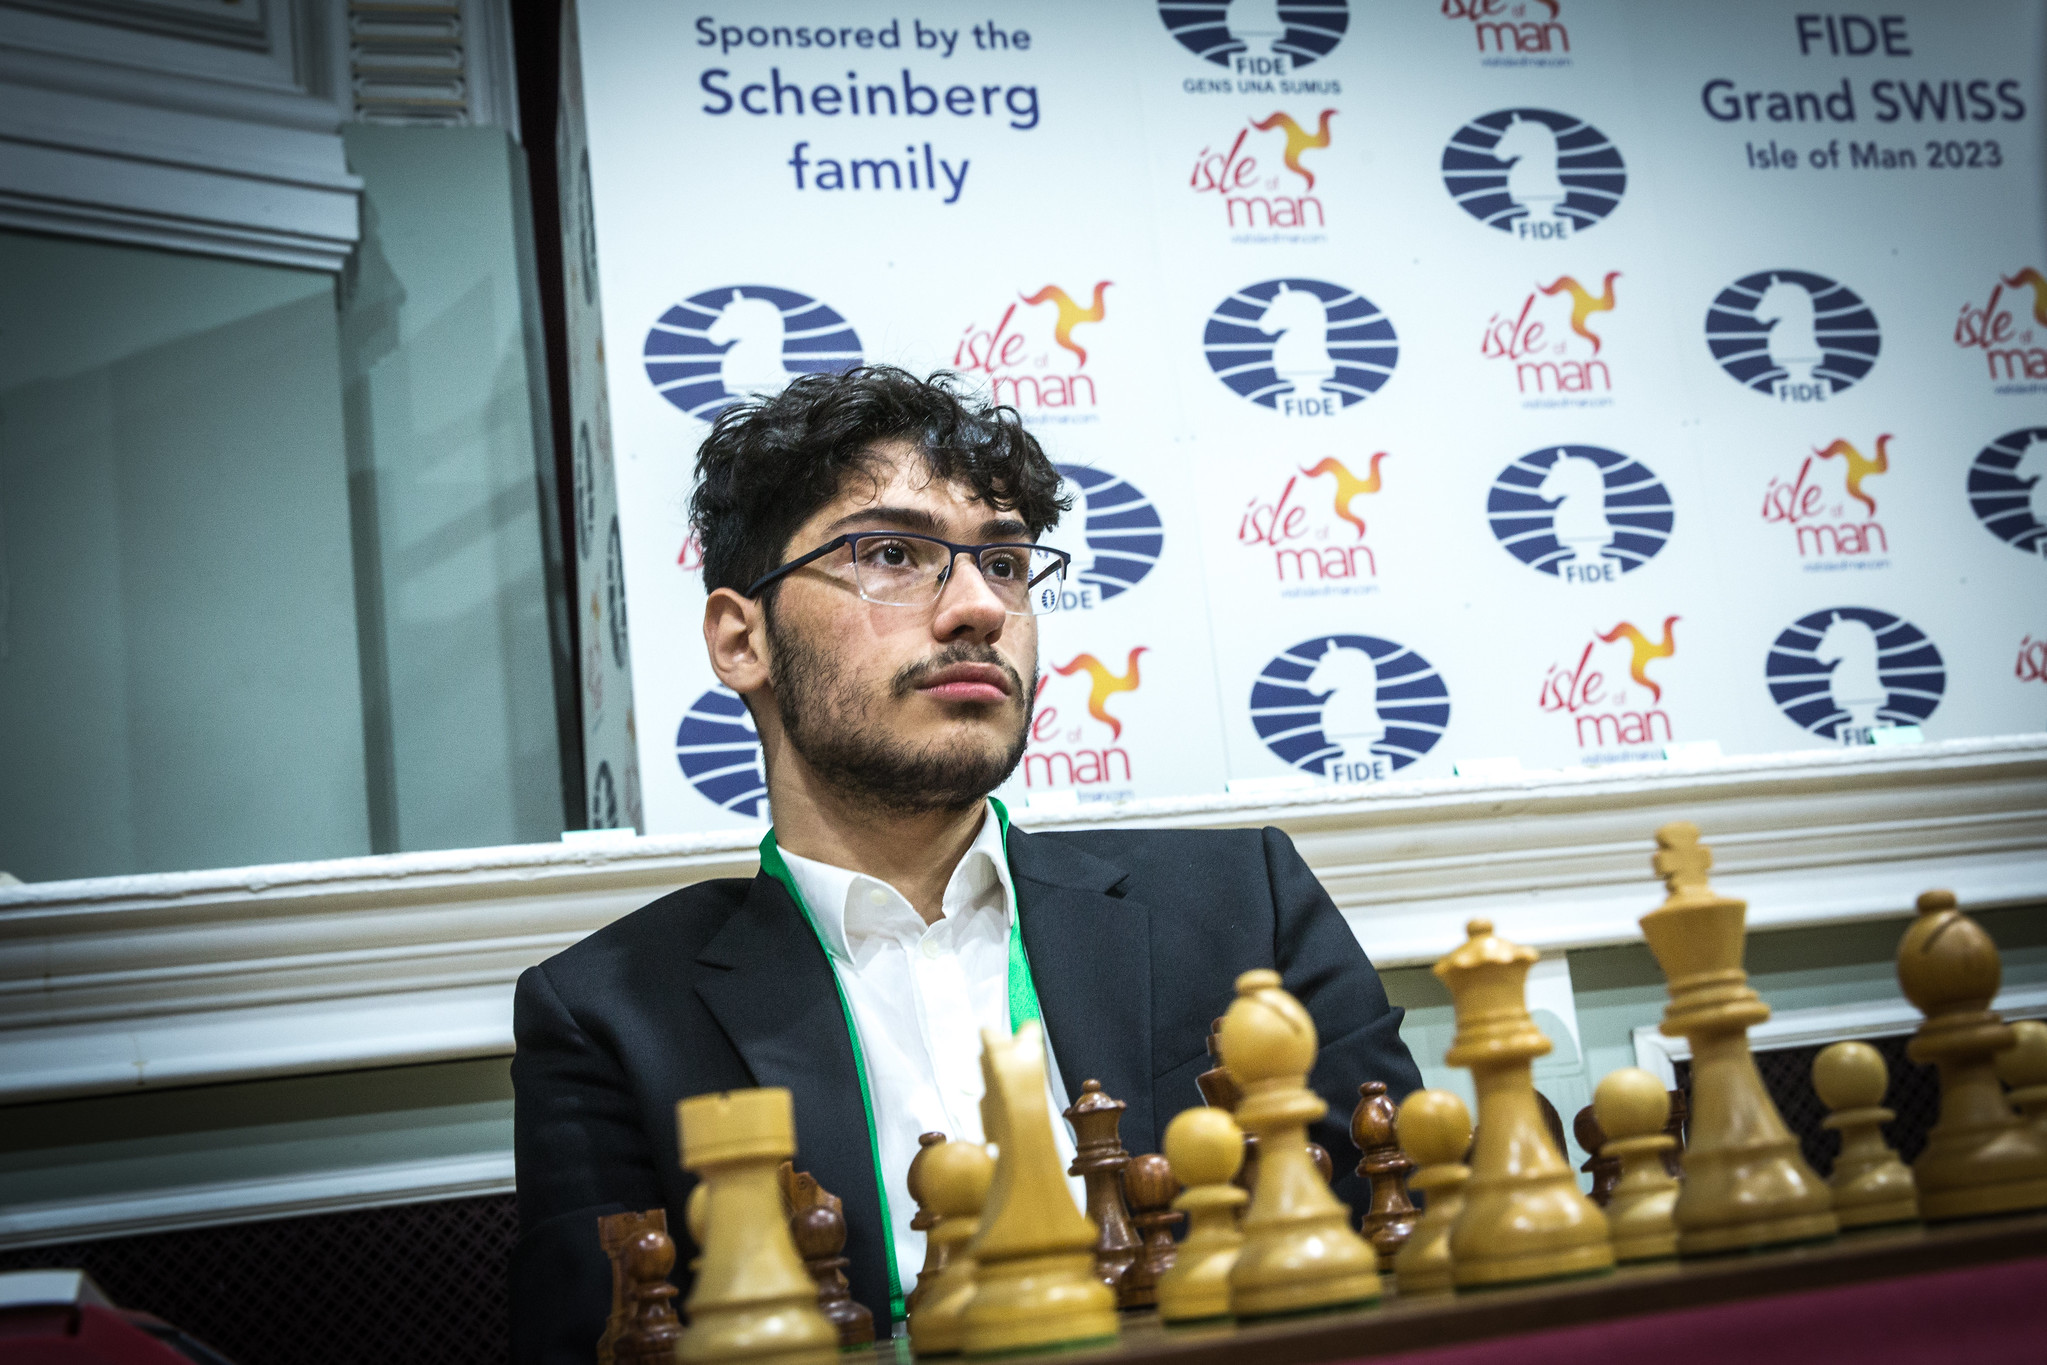 International Chess Federation on X: For @GothamChess, sharing